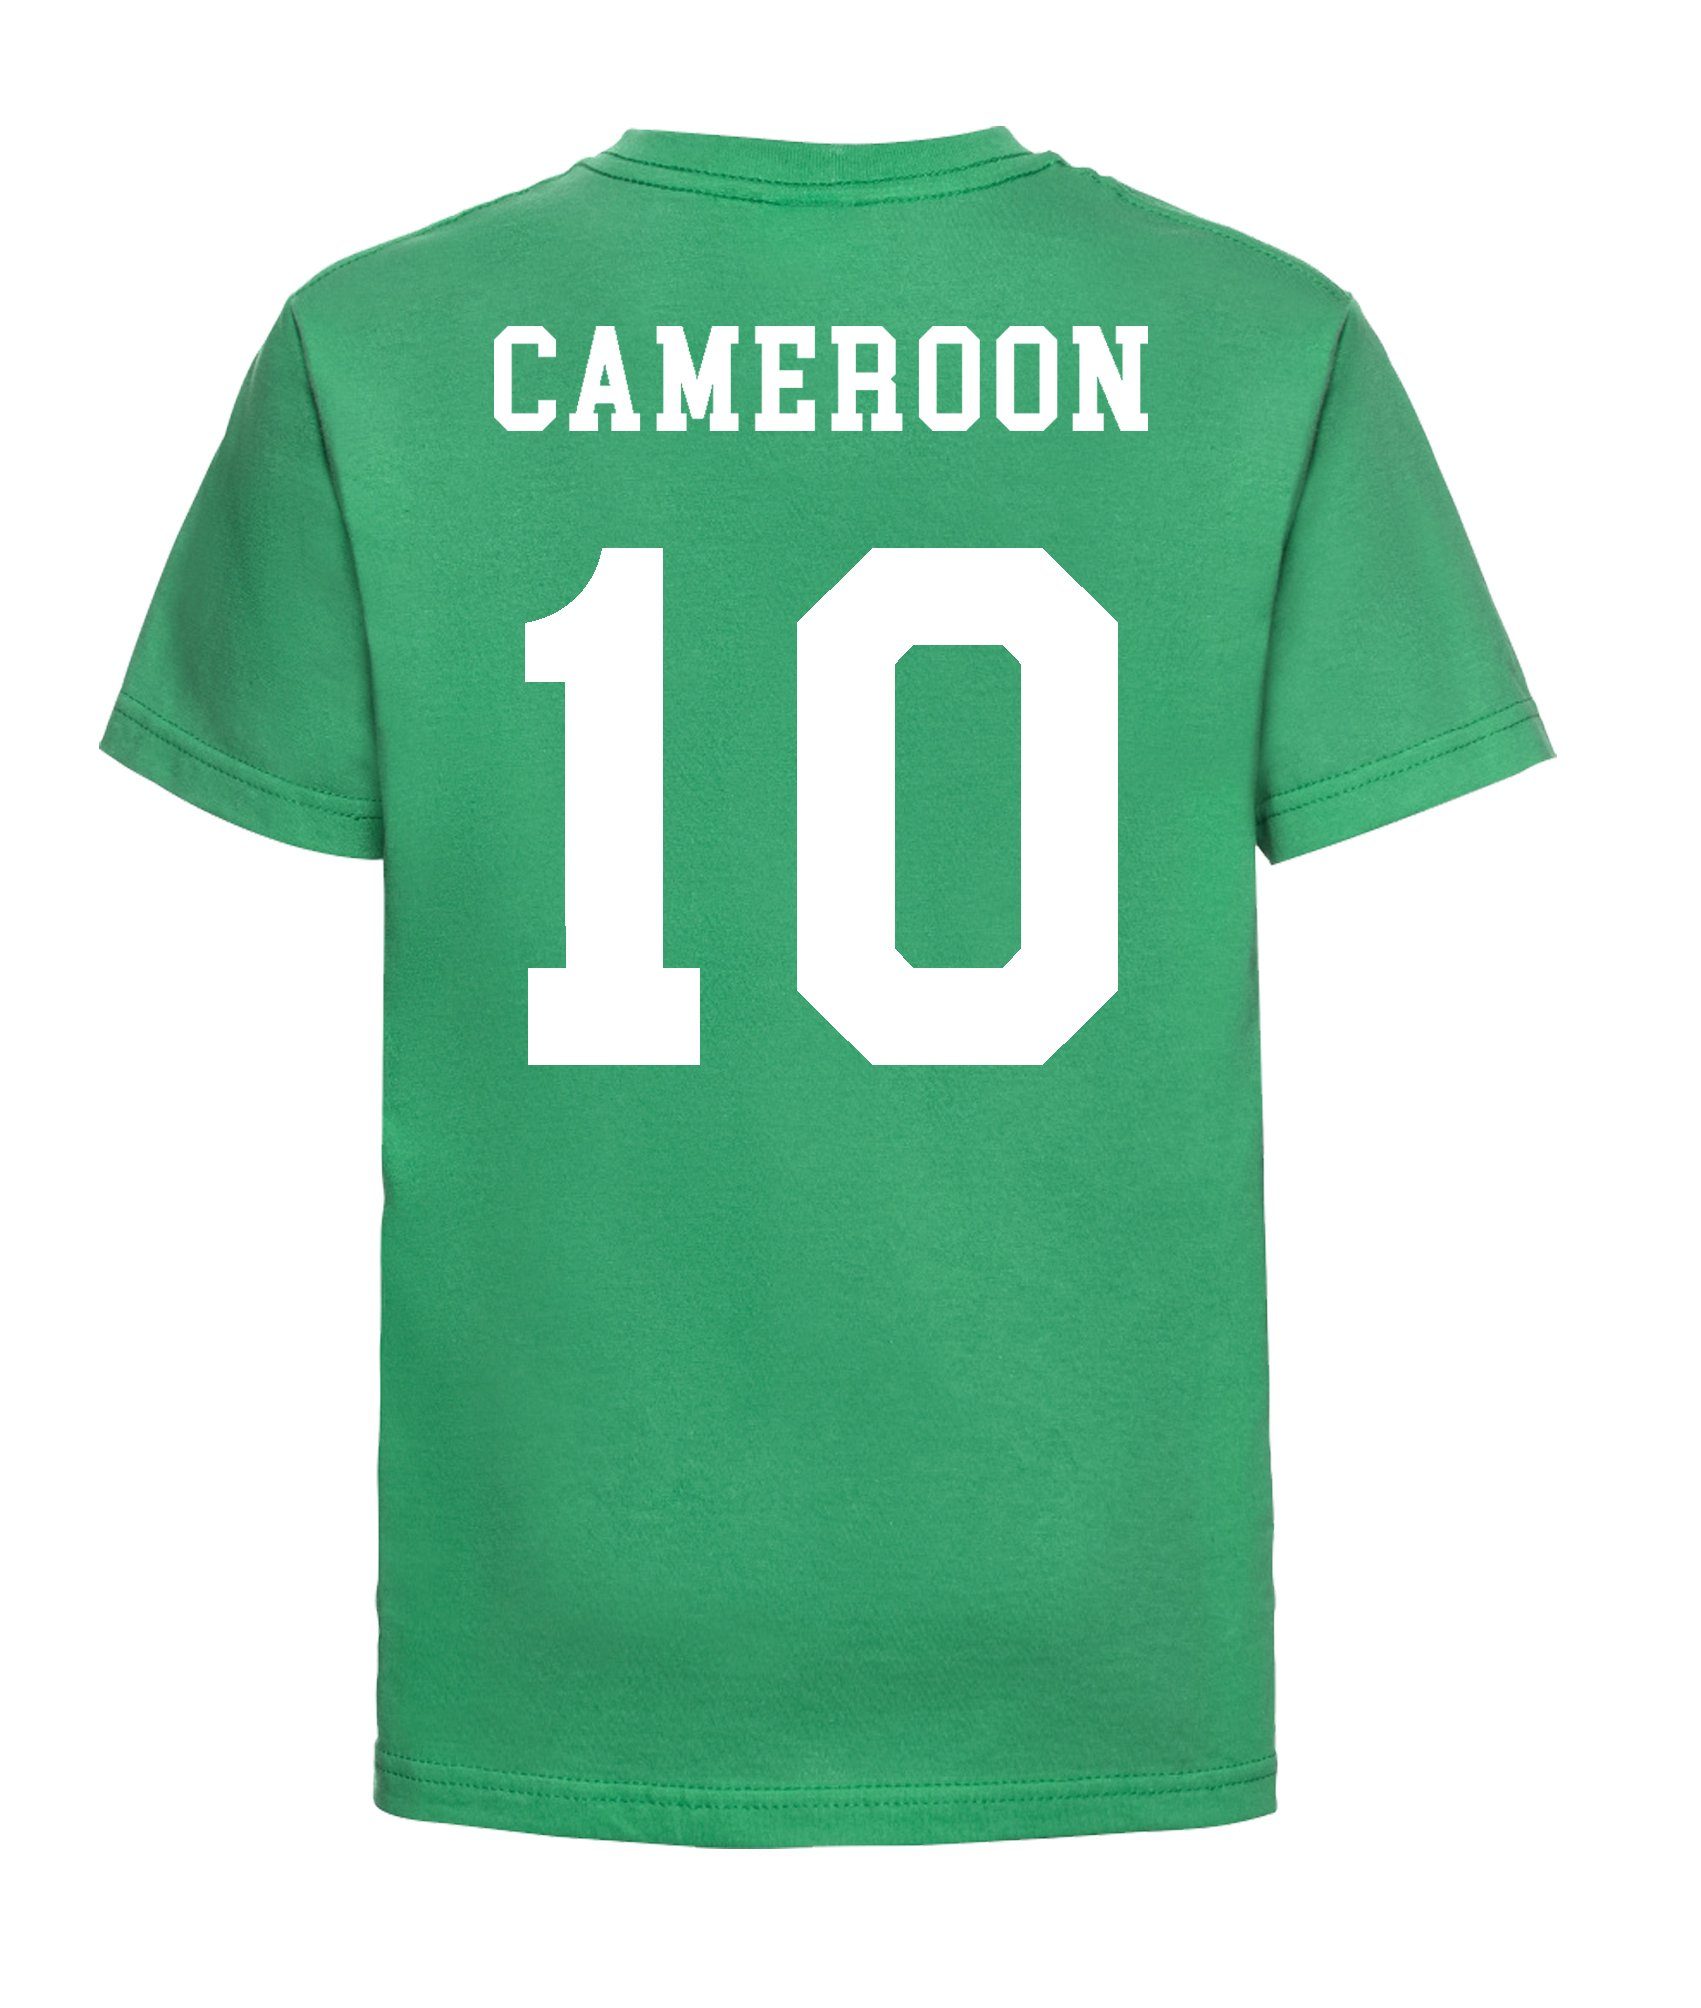 Youth Kamerun Trikot mit trendigem im Shirt Look T-Shirt Kinder Fußball Motiv Designz